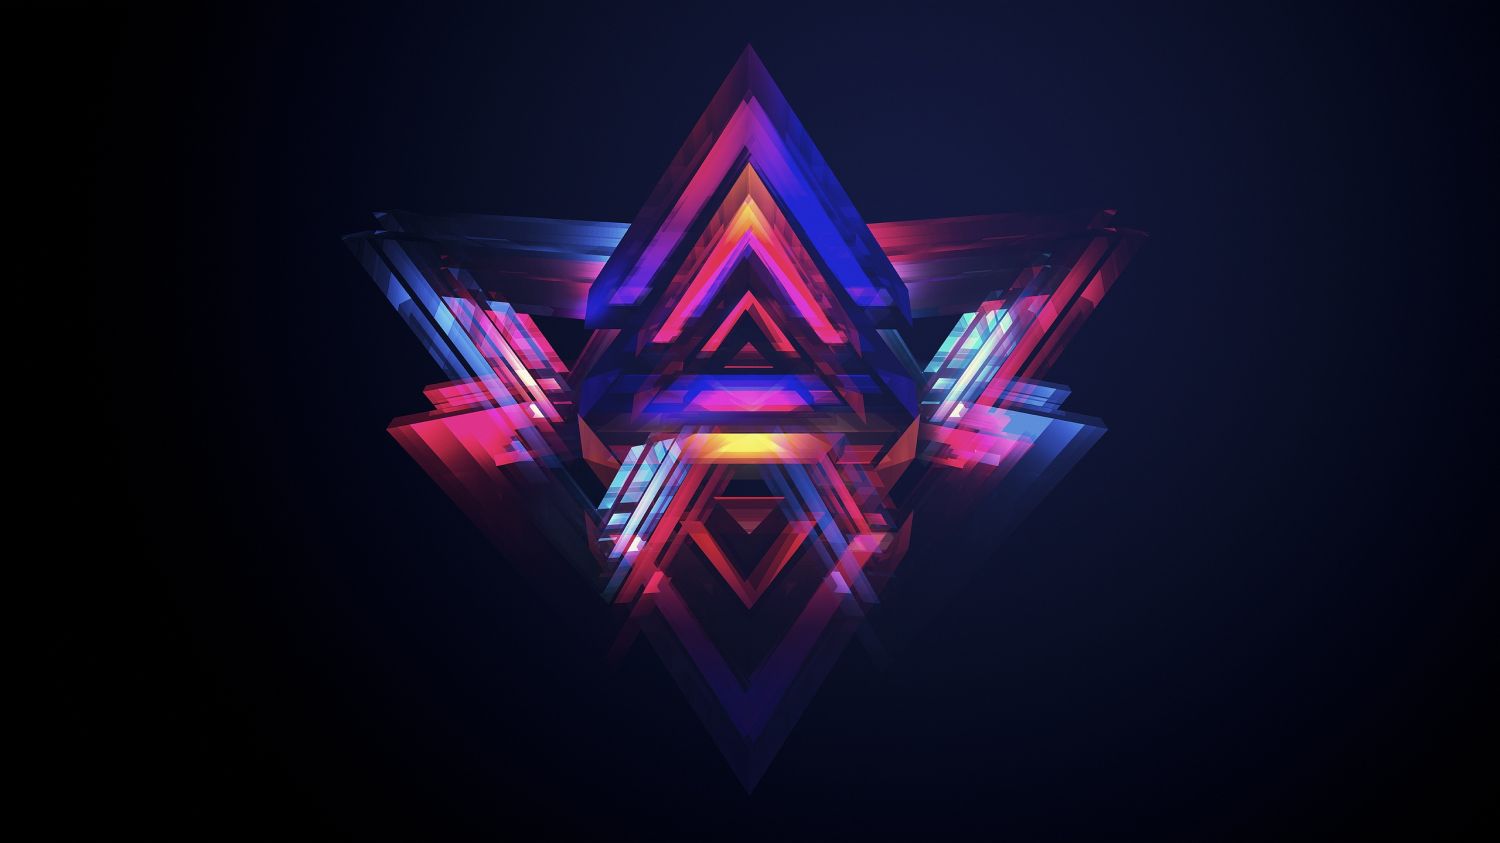 abstract_pyramids-2560x1440.jpg